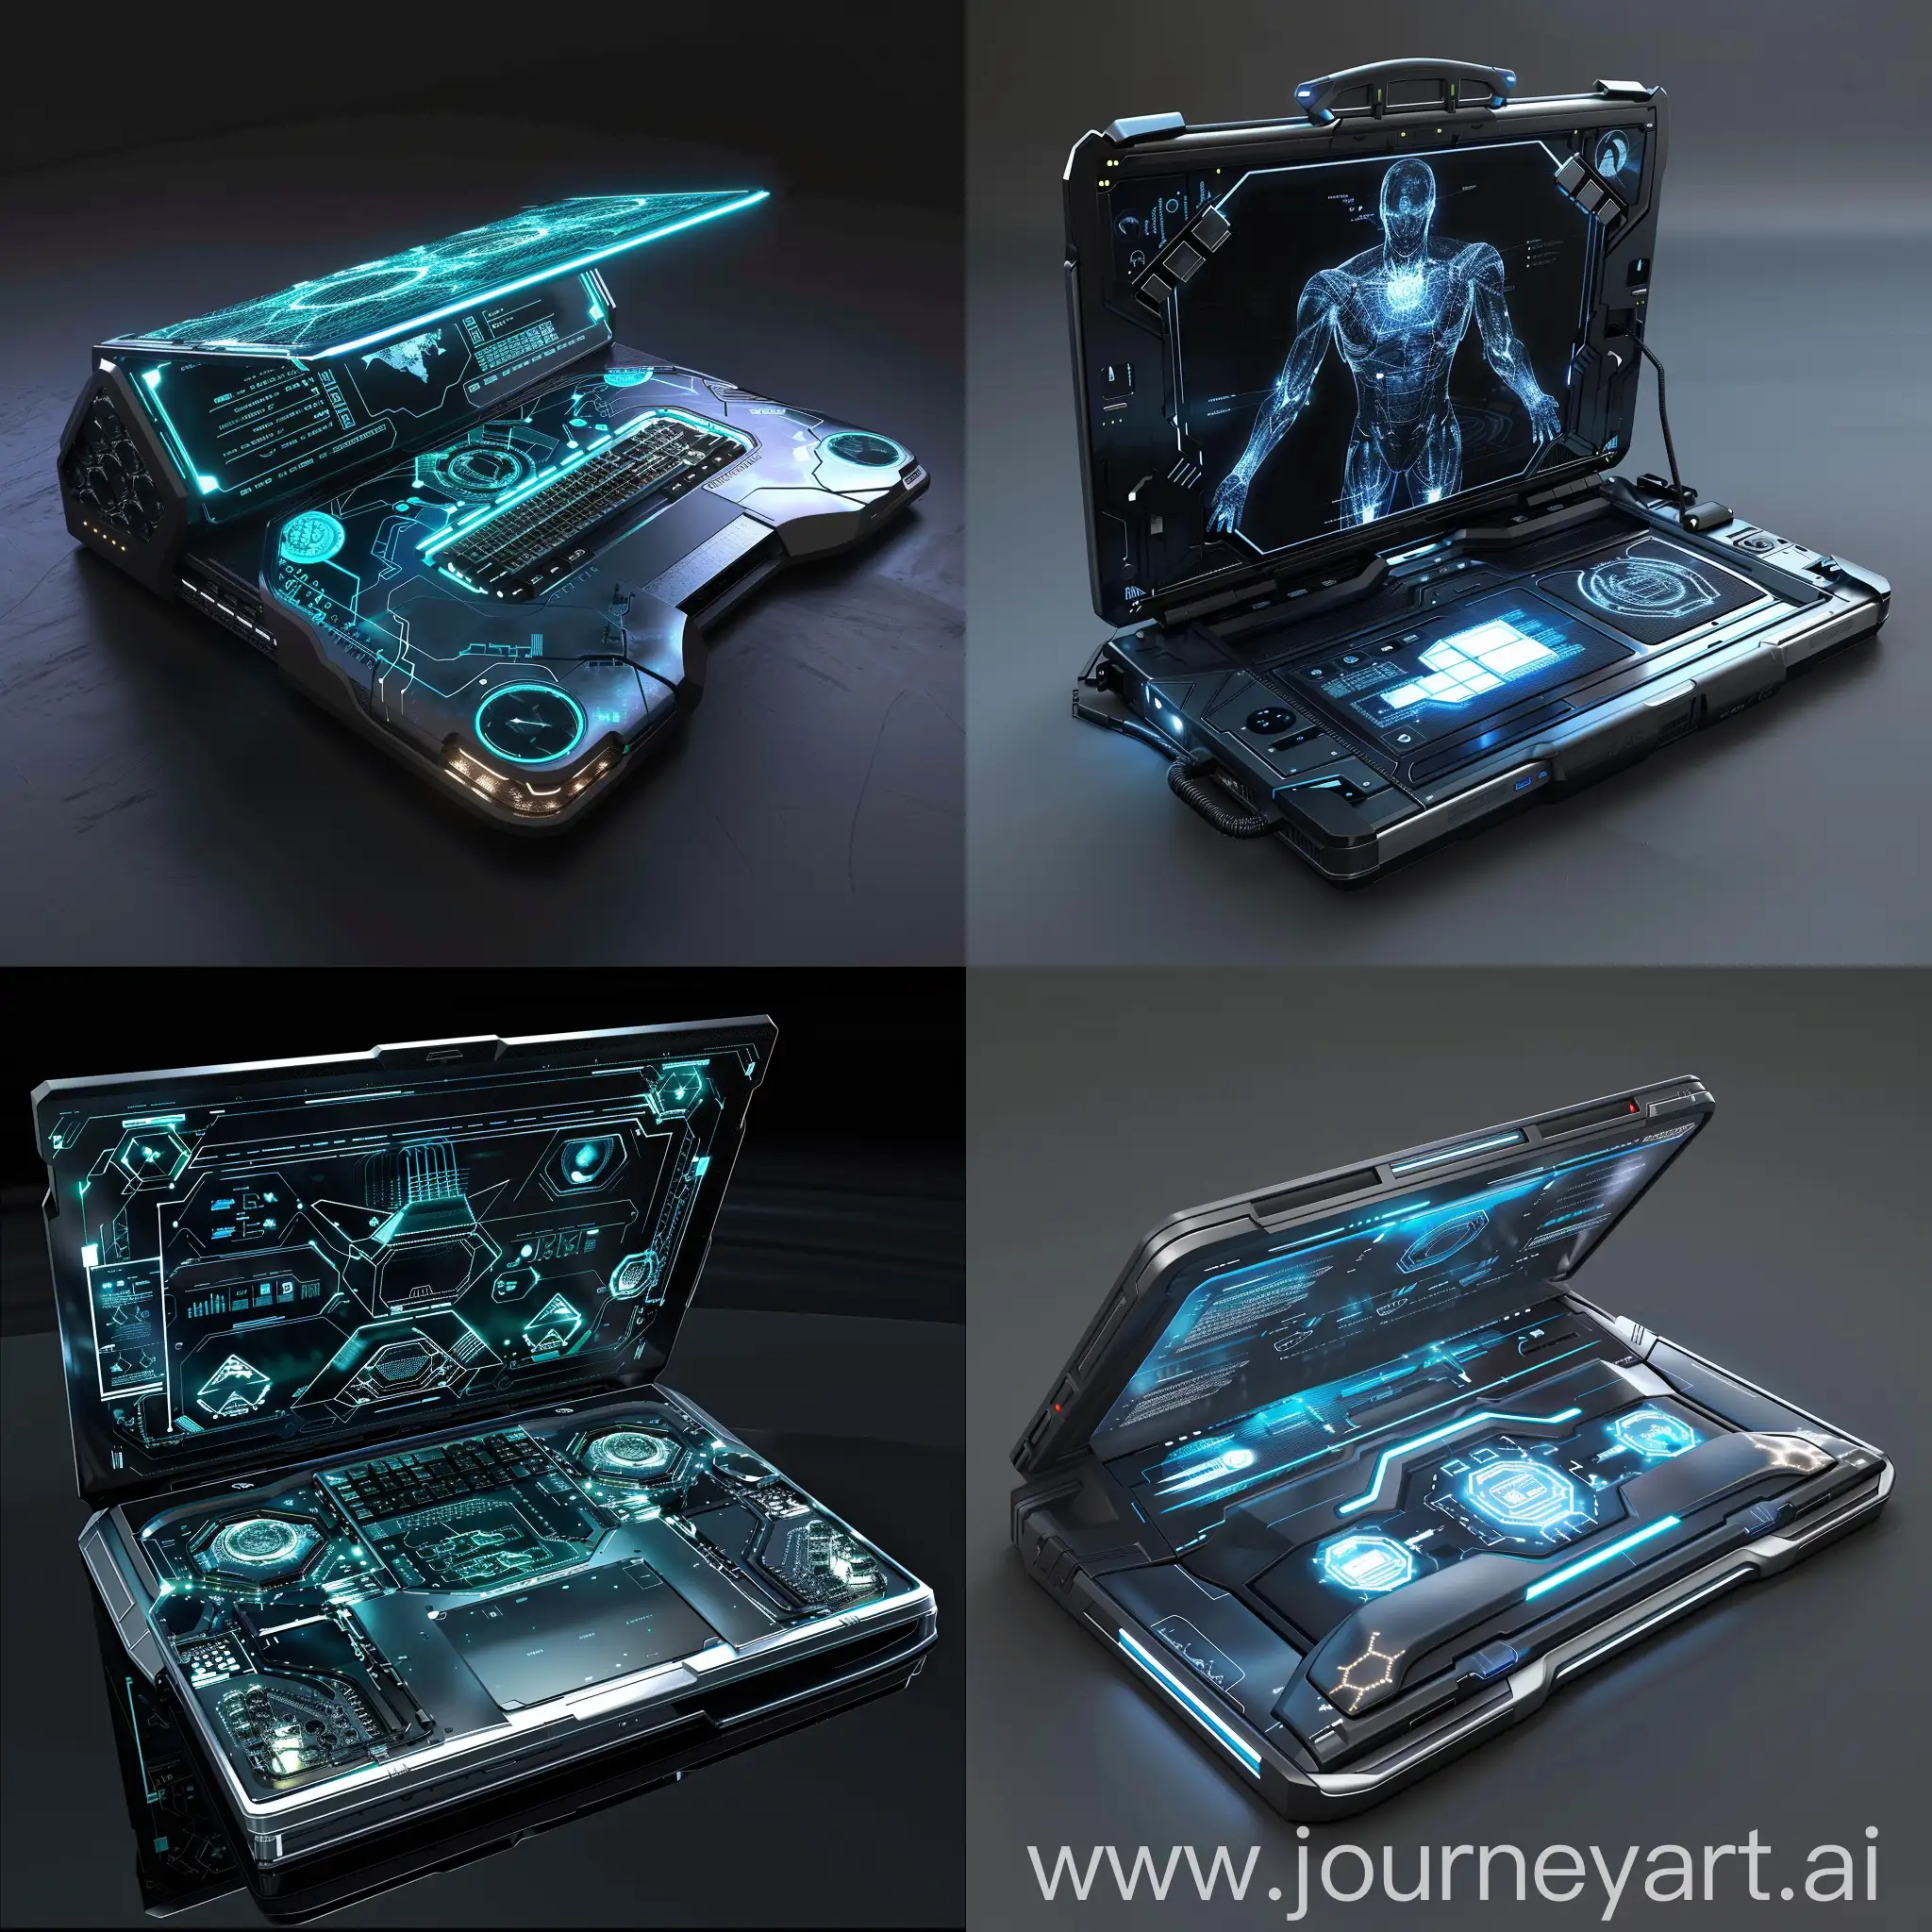 Futuristic-SciFi-Laptop-with-Quantum-Processor-and-Holographic-Displays